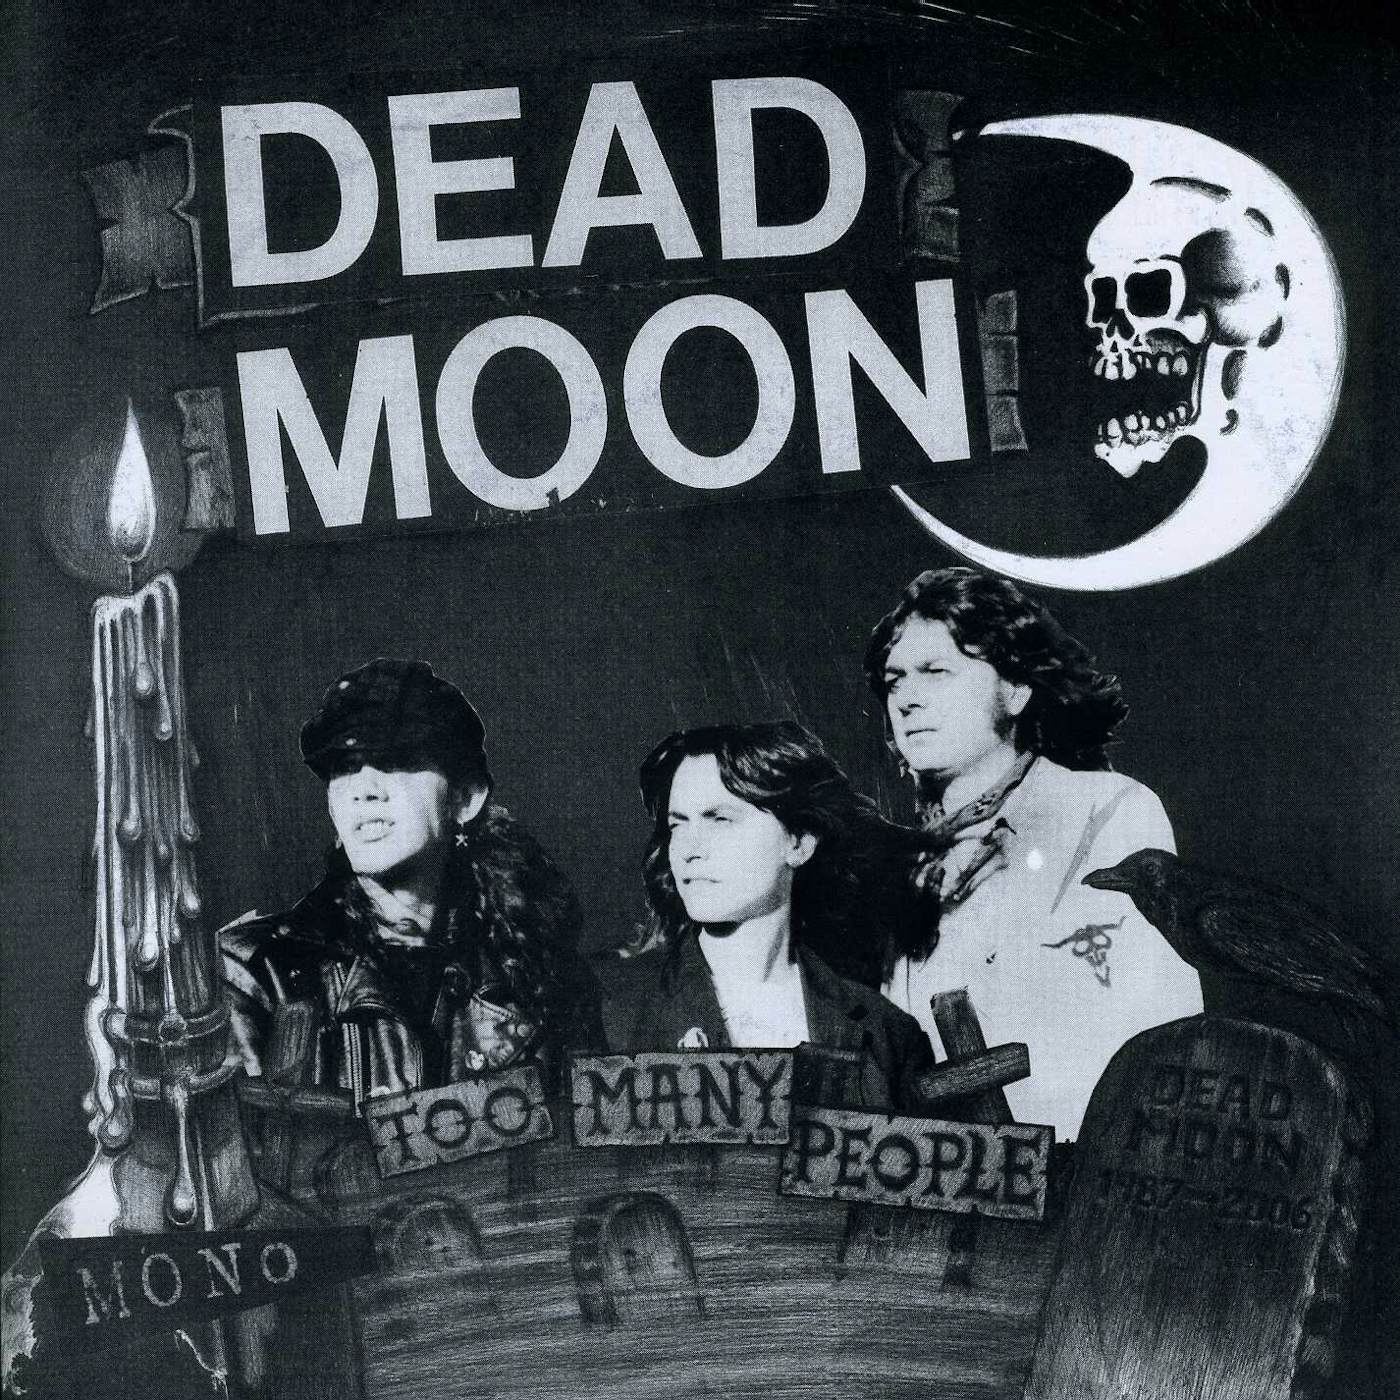 Dead Moon TOO MANY PEOPLE Vinyl Record